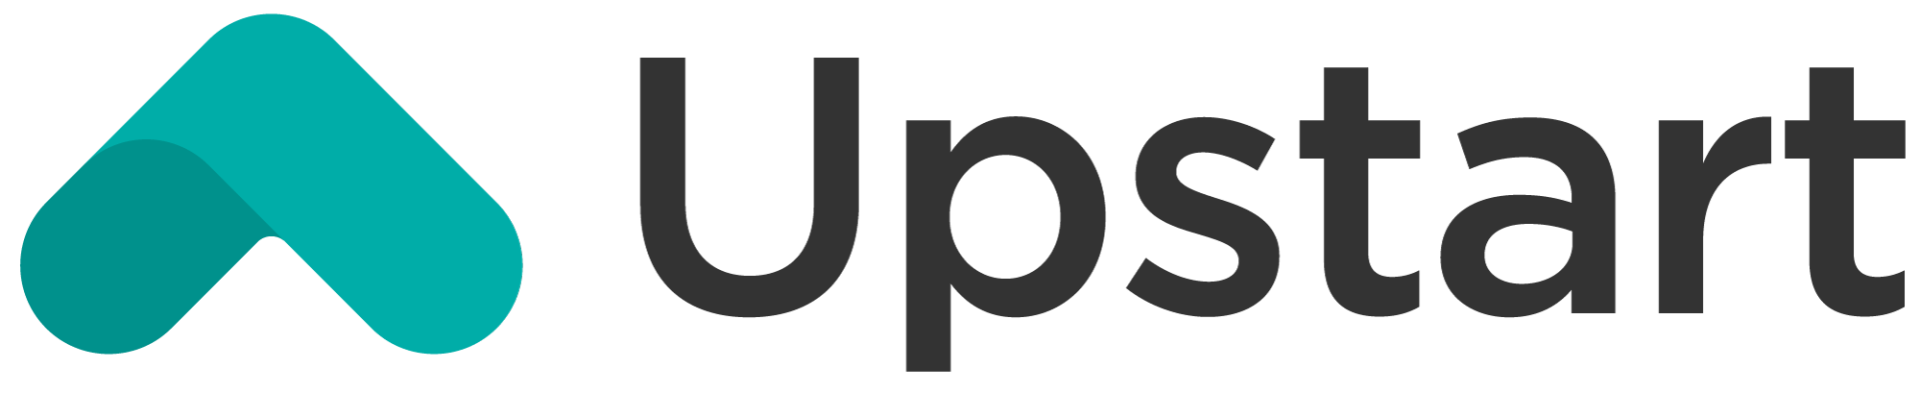 Upstart Network Inc